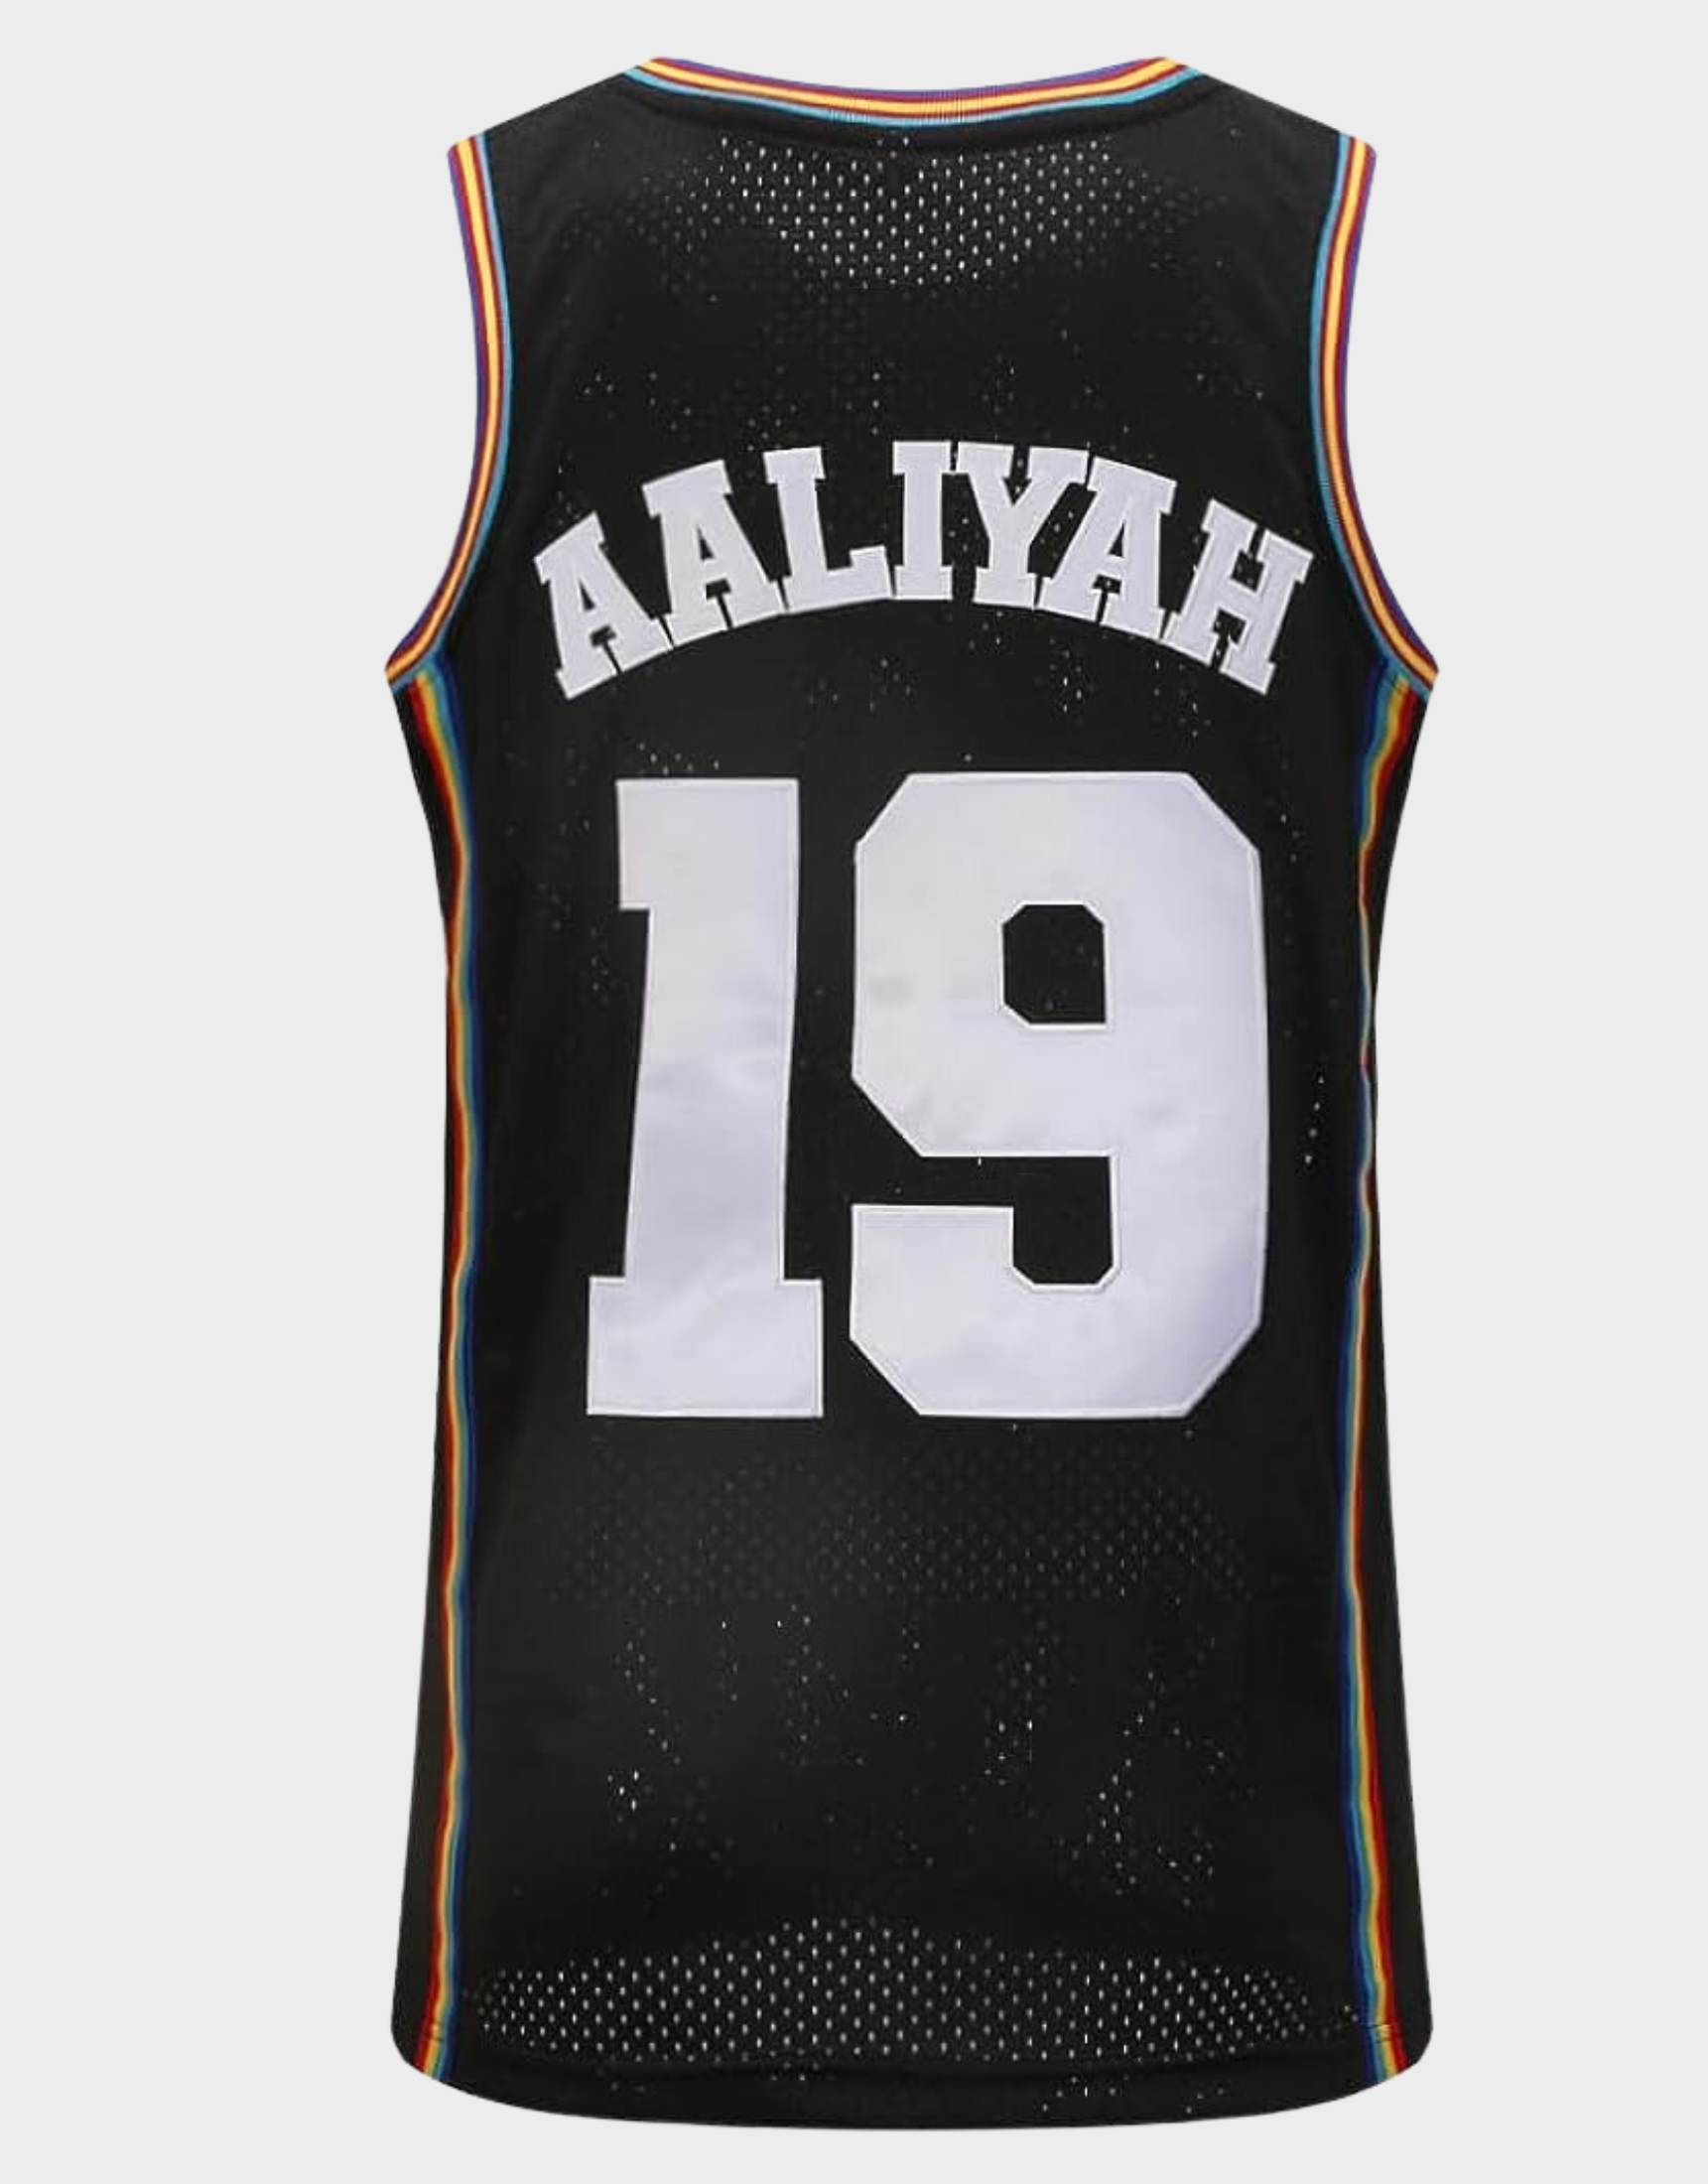 96 Rock N Jock Aaliyah Bricklayers 19 Basketball Jerseys 